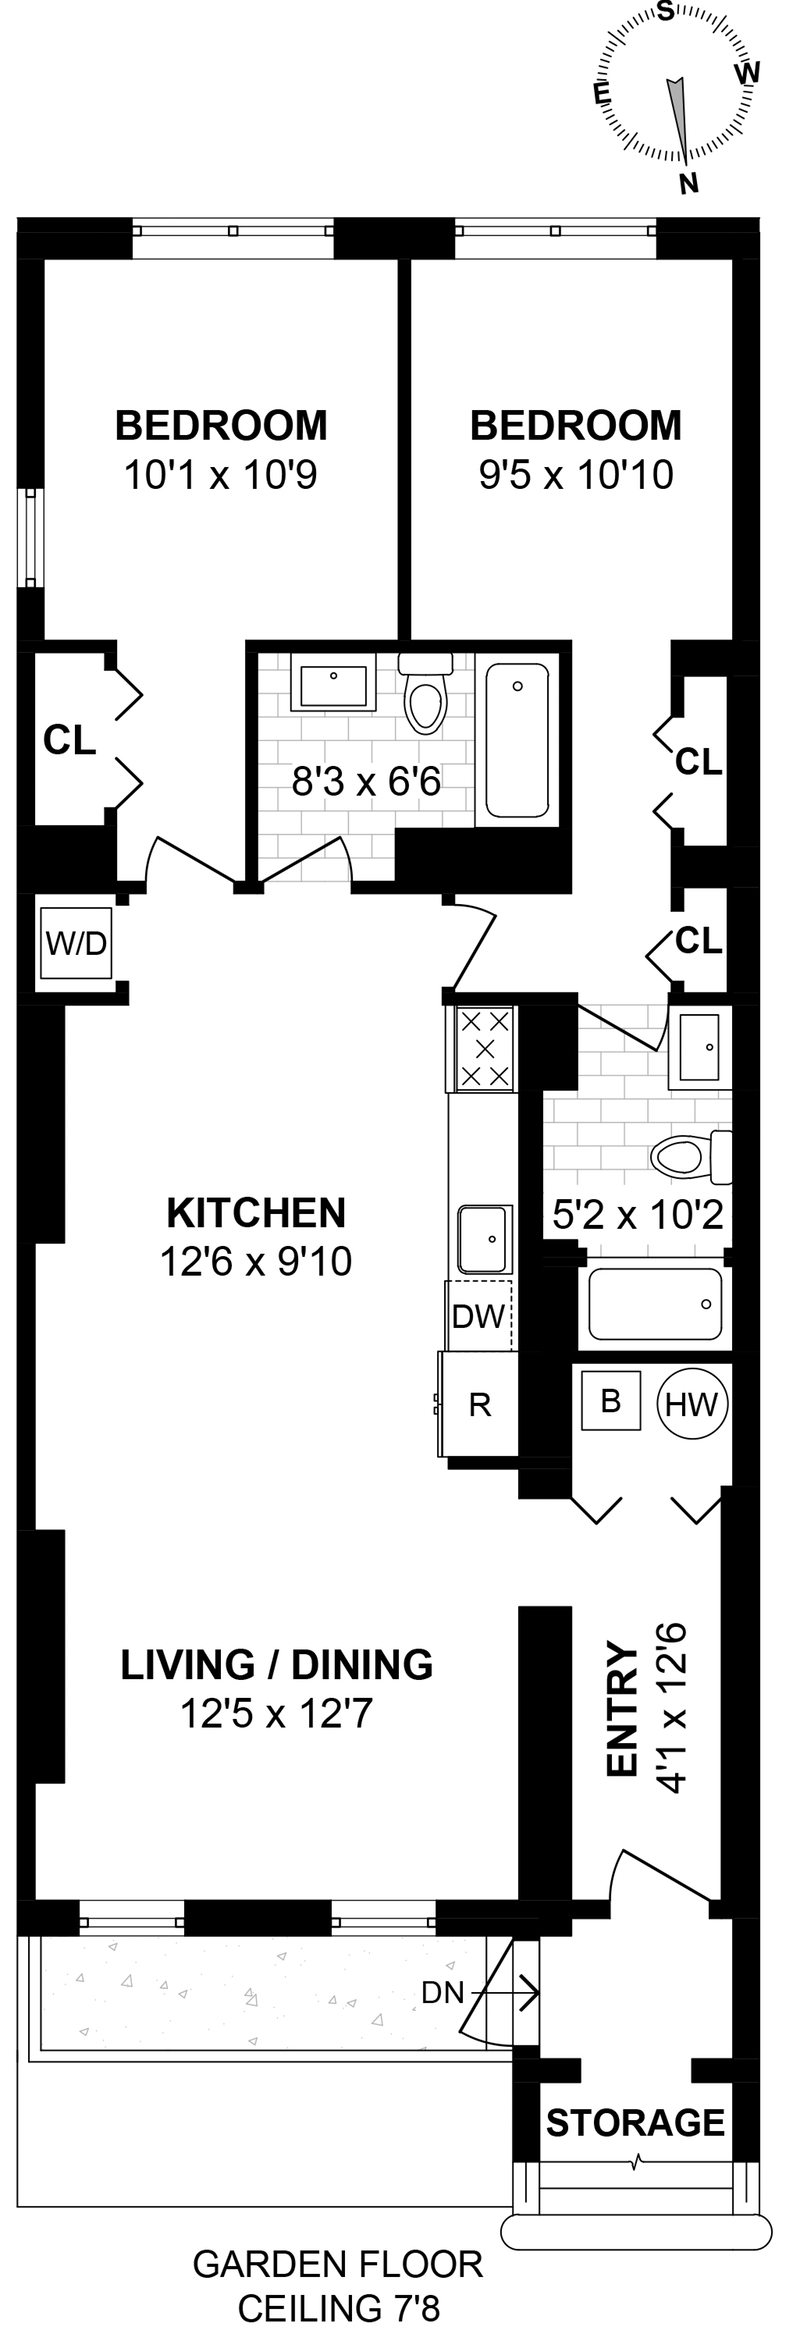 Floorplan for 239 4th Street, 1